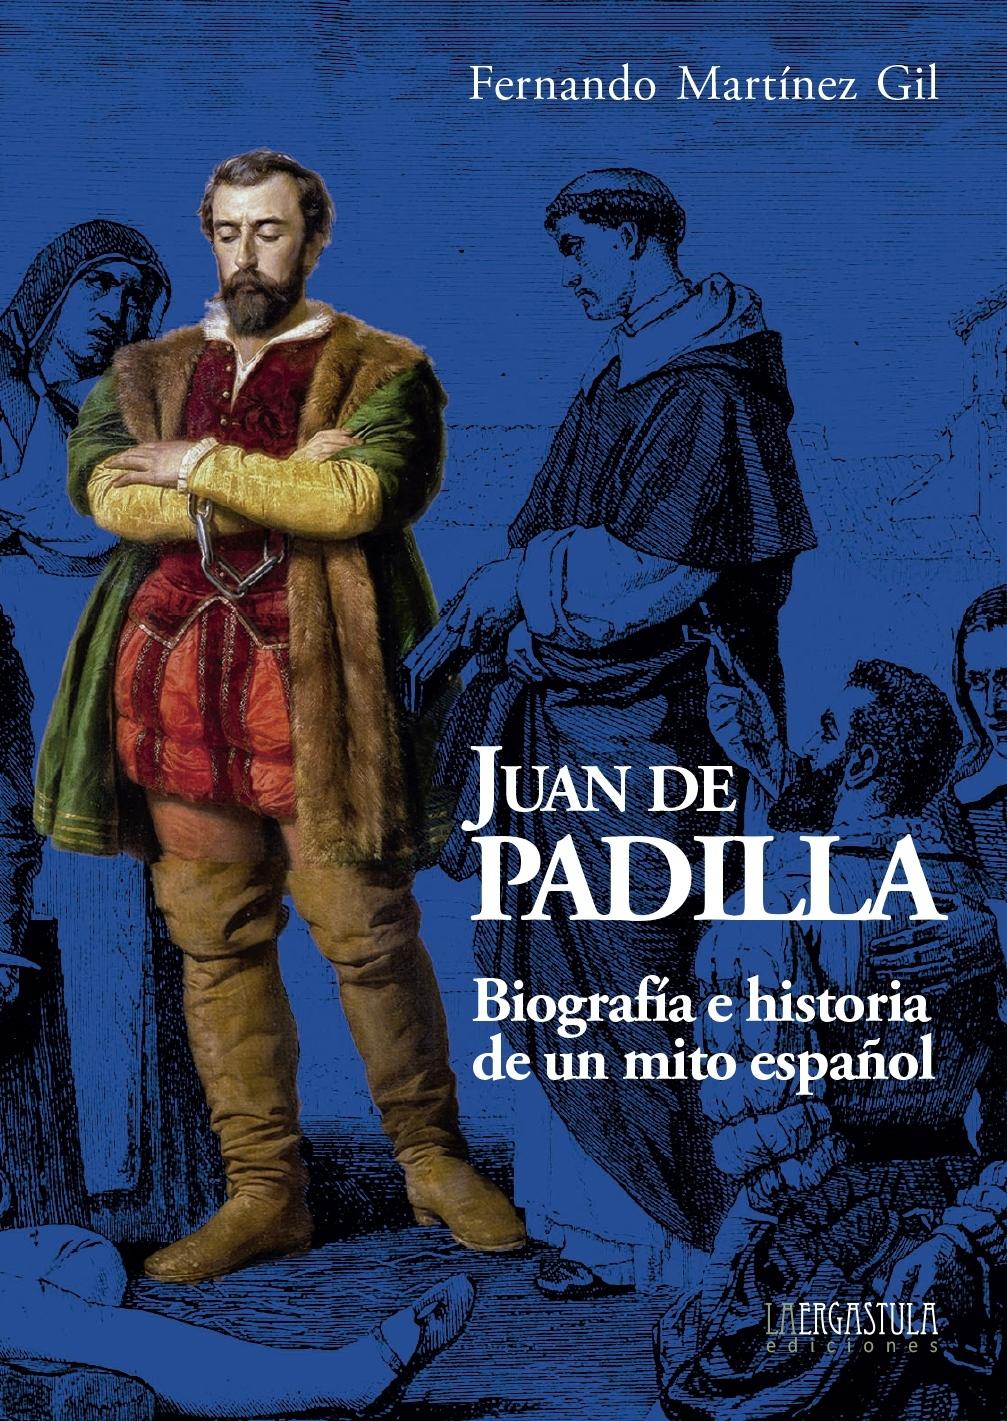 Juan de Padilla "Biografía e historia de un mito español"